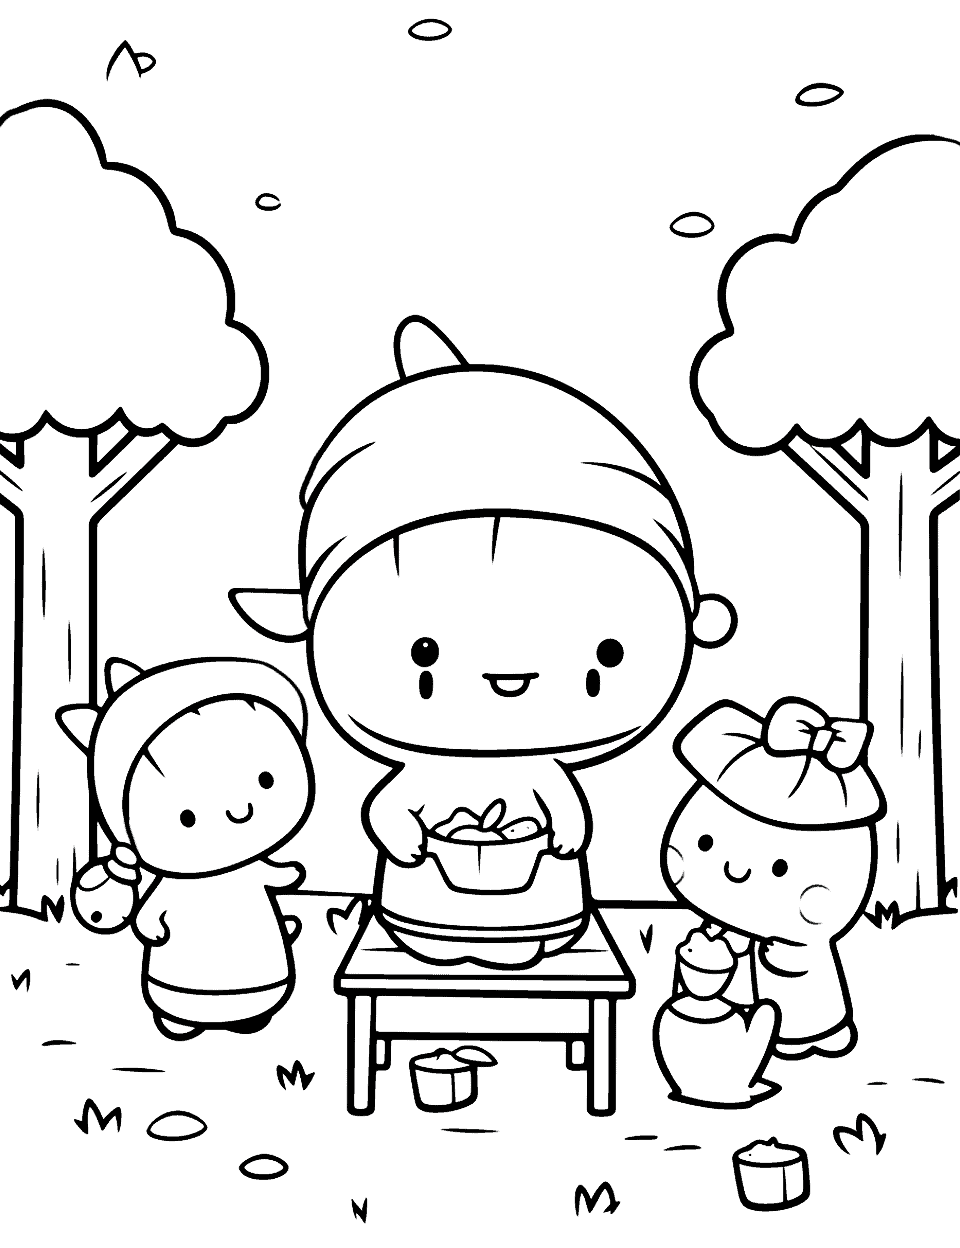 Kawaii Crush Park Outing Coloring Page - A set of Kawaii Crush characters having a picnic in a park.